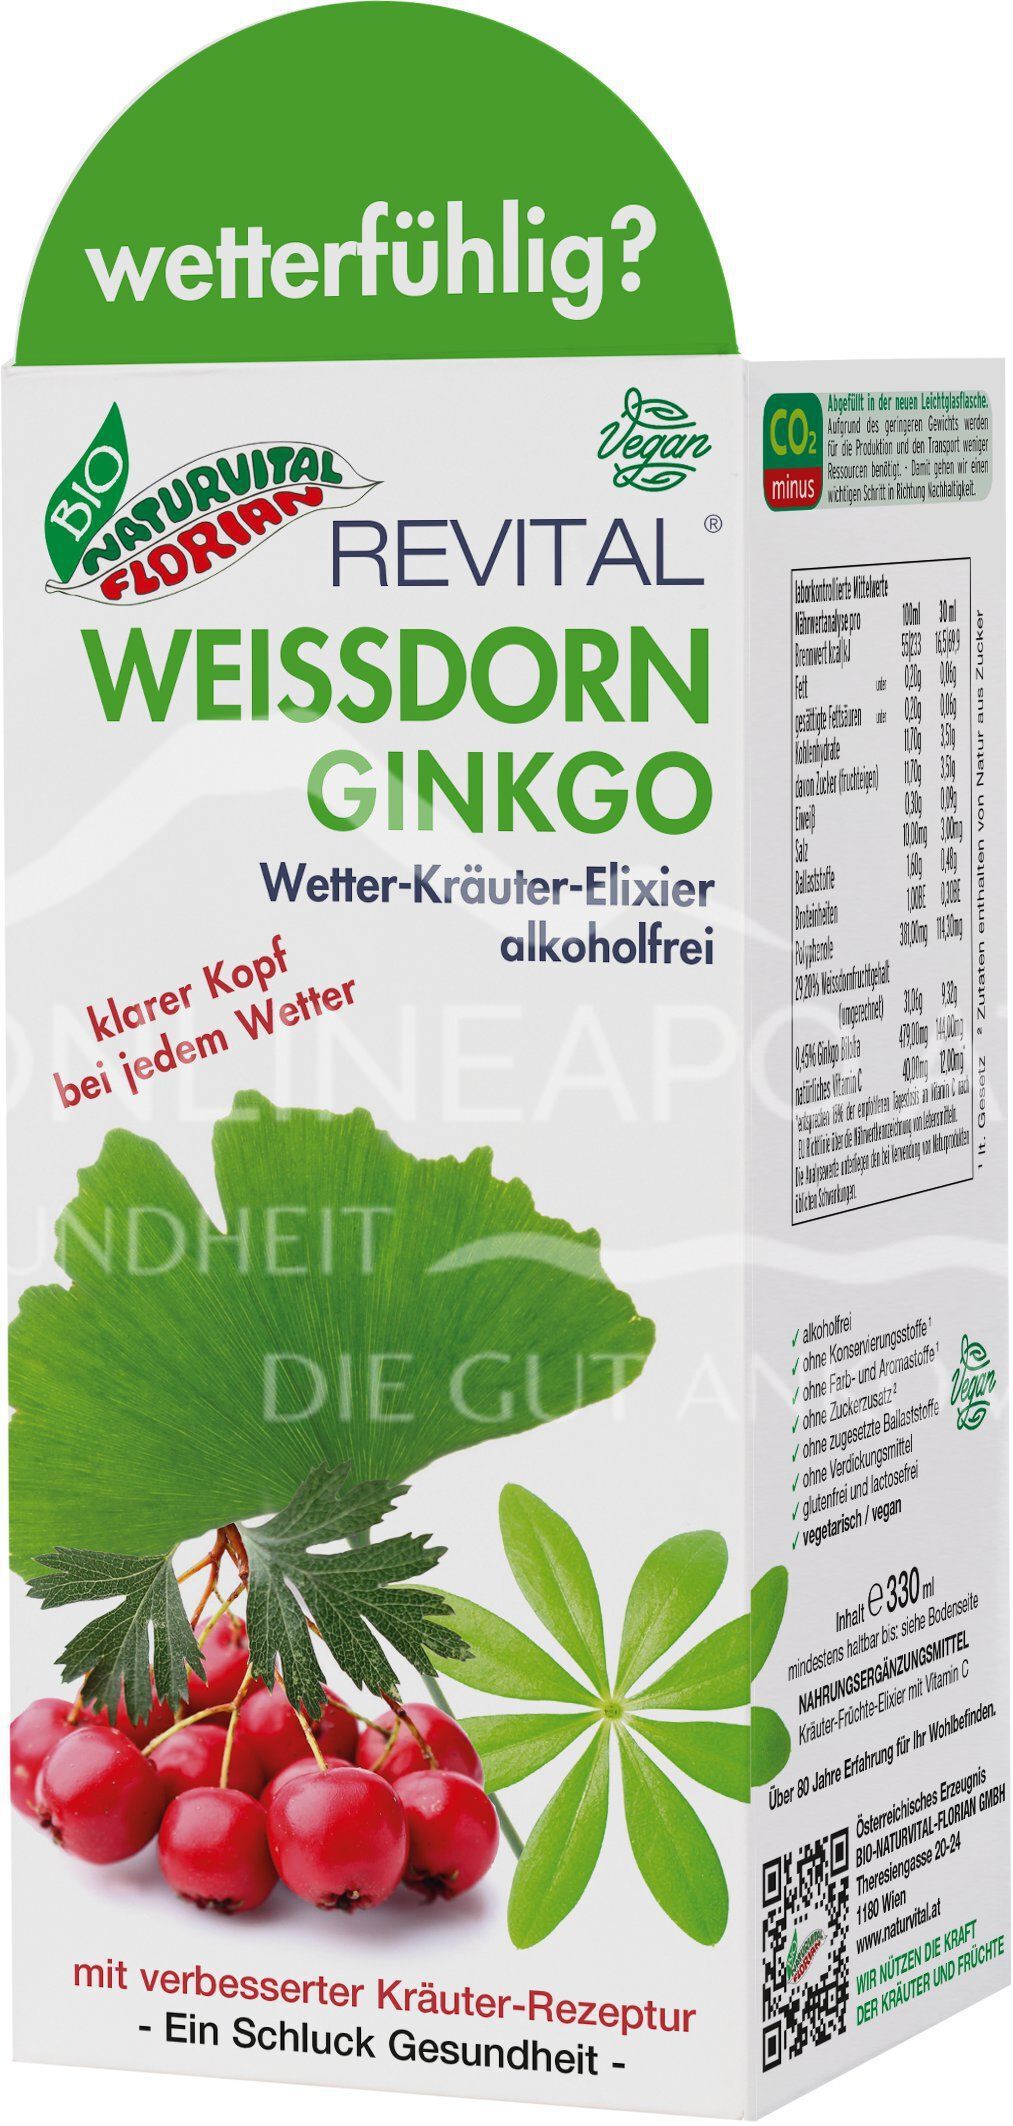 Bio Naturvital Florian Revital Weissdorn Ginkgo Kräuter-Früchte-Elixier